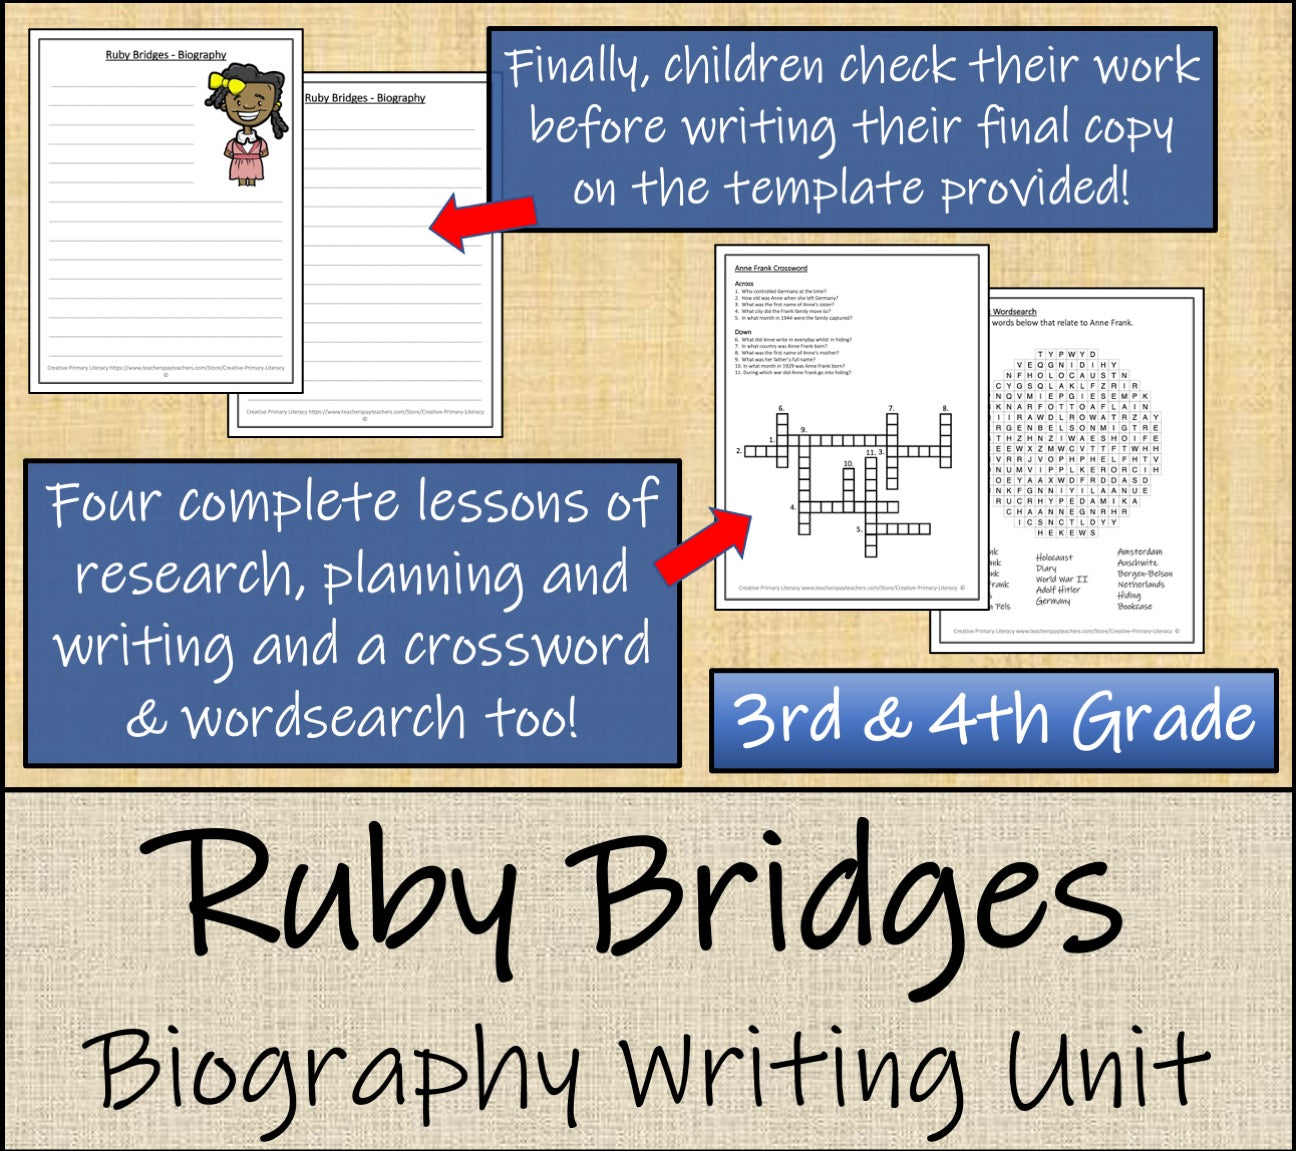 Ruby Bridges Biography Writing Unit | 3rd Grade & 4th Grade